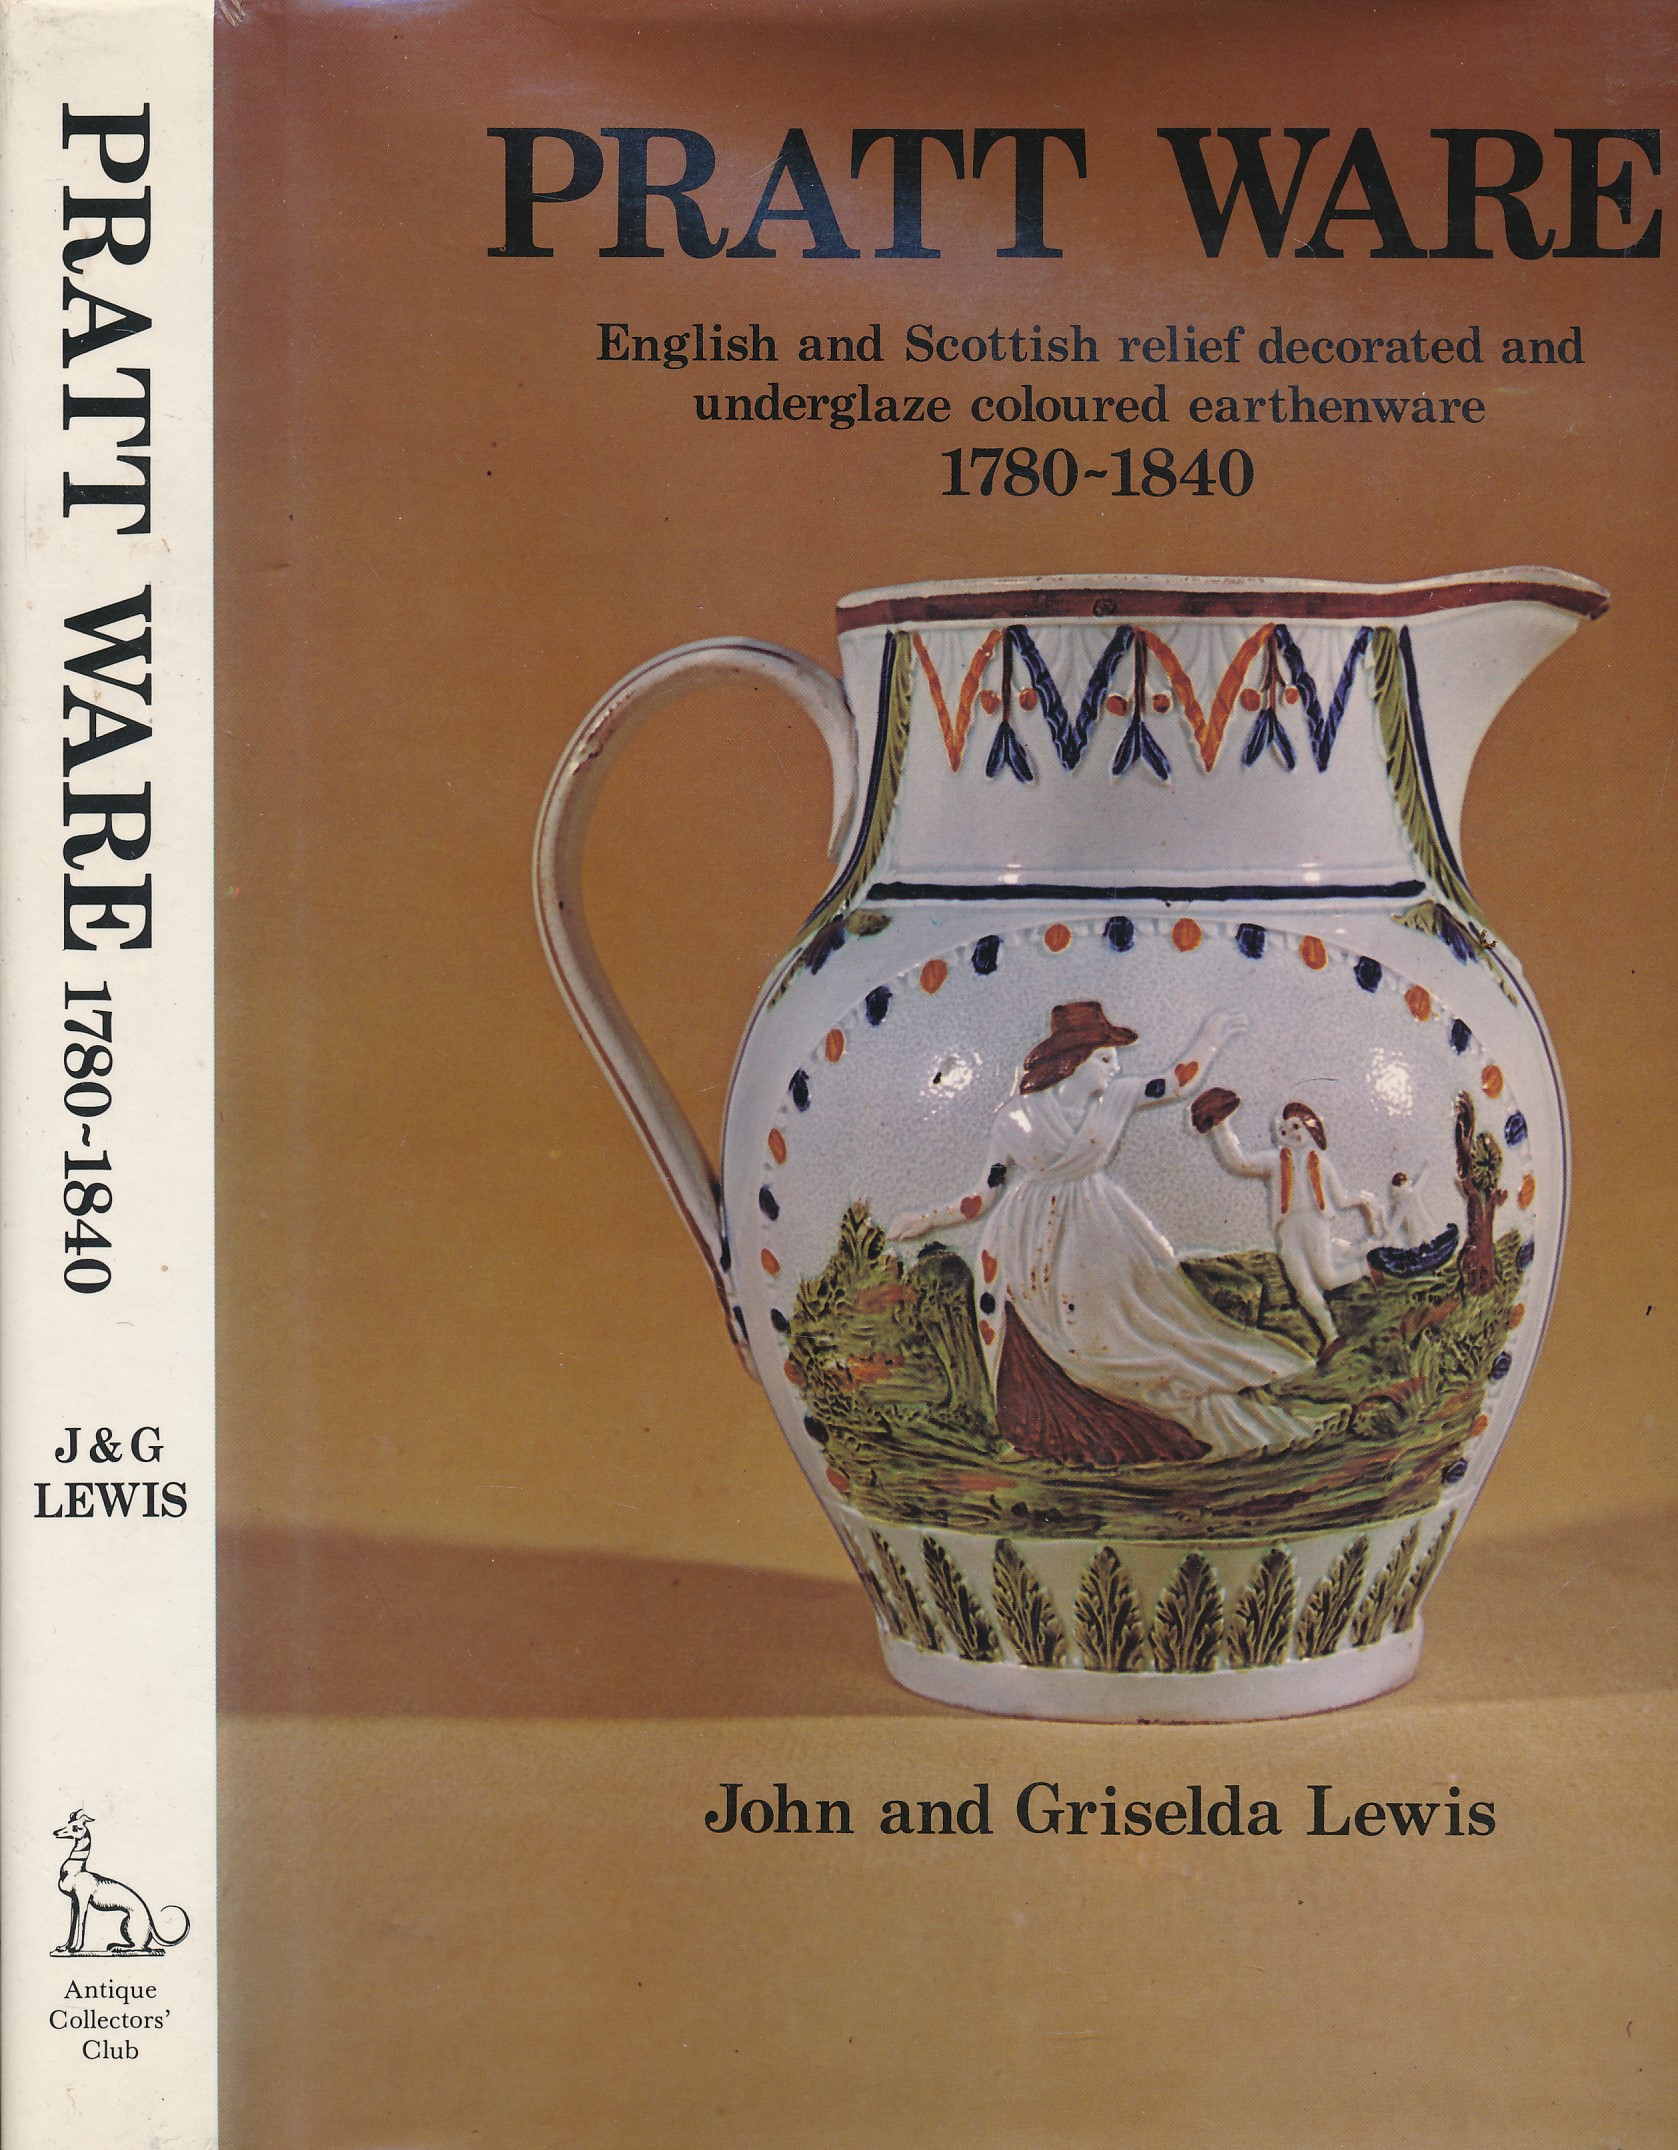 Pratt Ware: English and Scottish Relief Decorated and Underglaze Coloured Earthenware. 1780-1840.